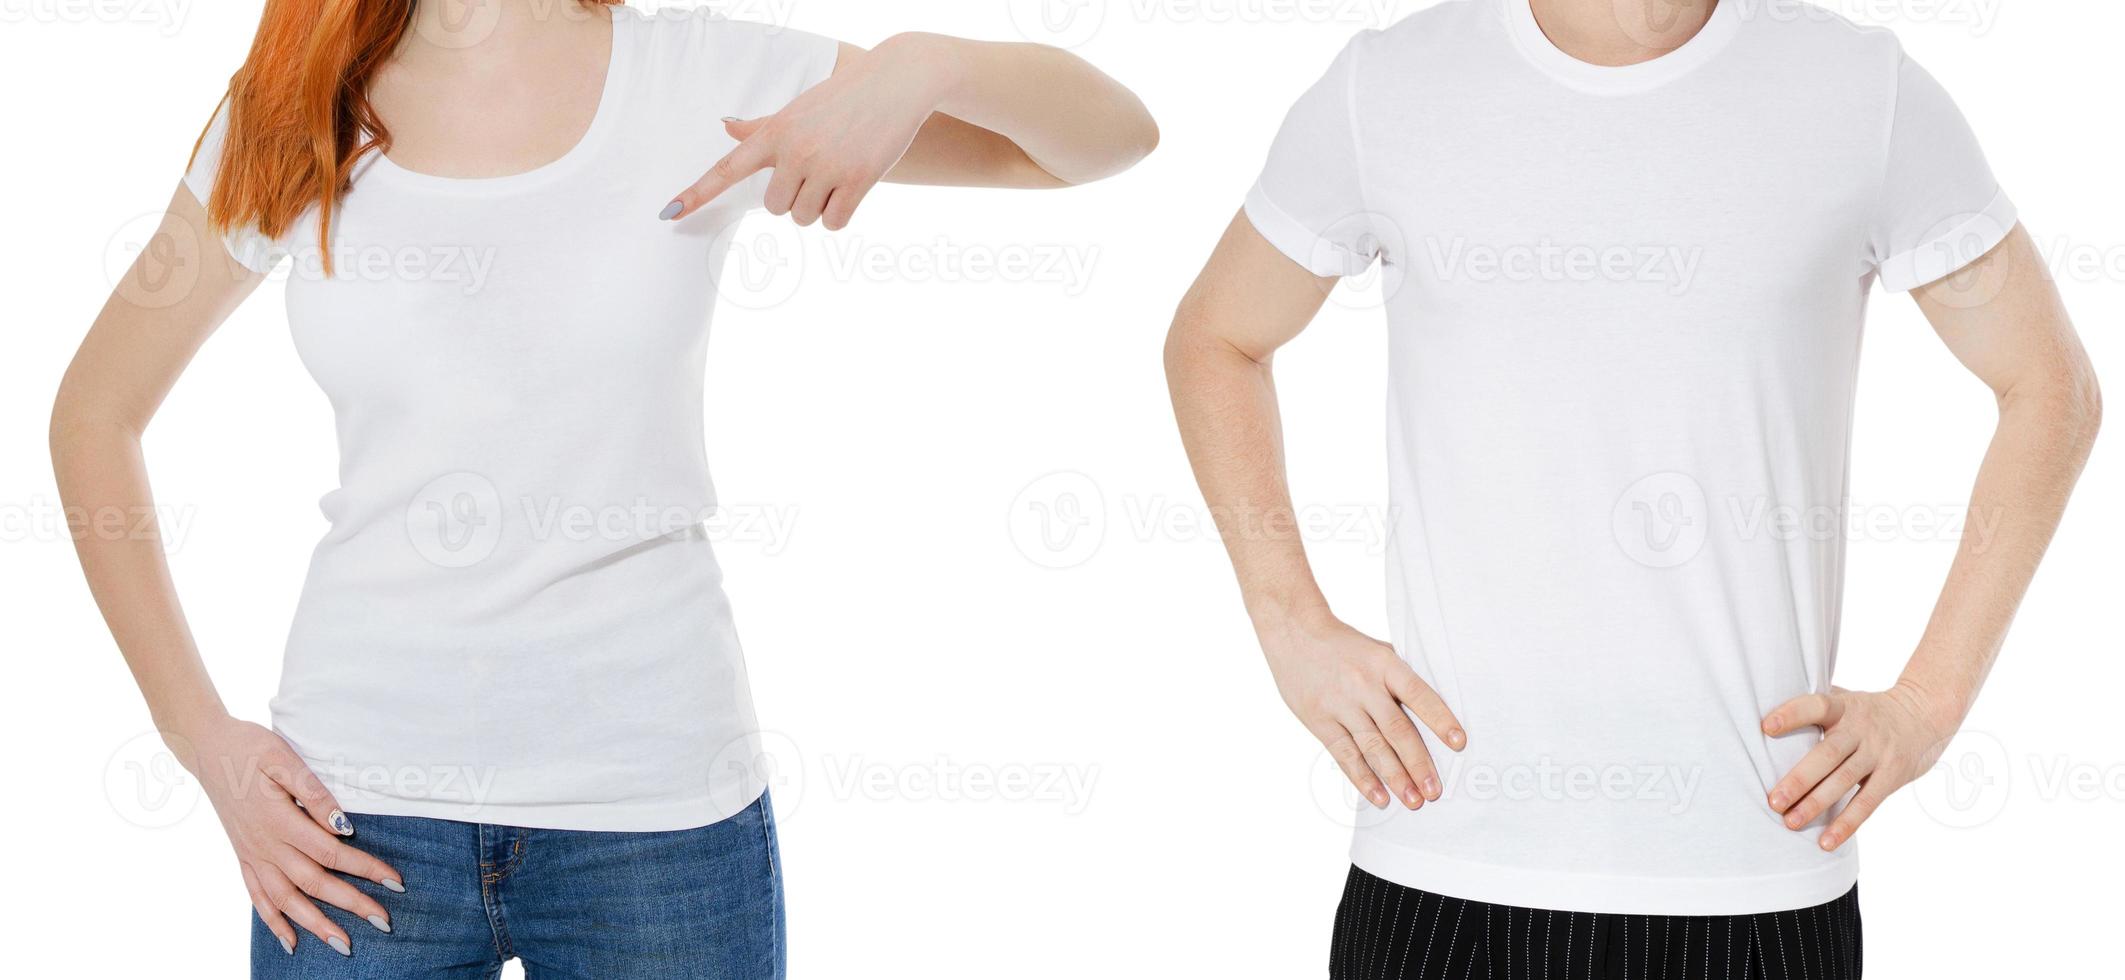 witte t-shirt set close-up mockup - meisje man t-shirt achtergrond, leeg wit overhemd foto